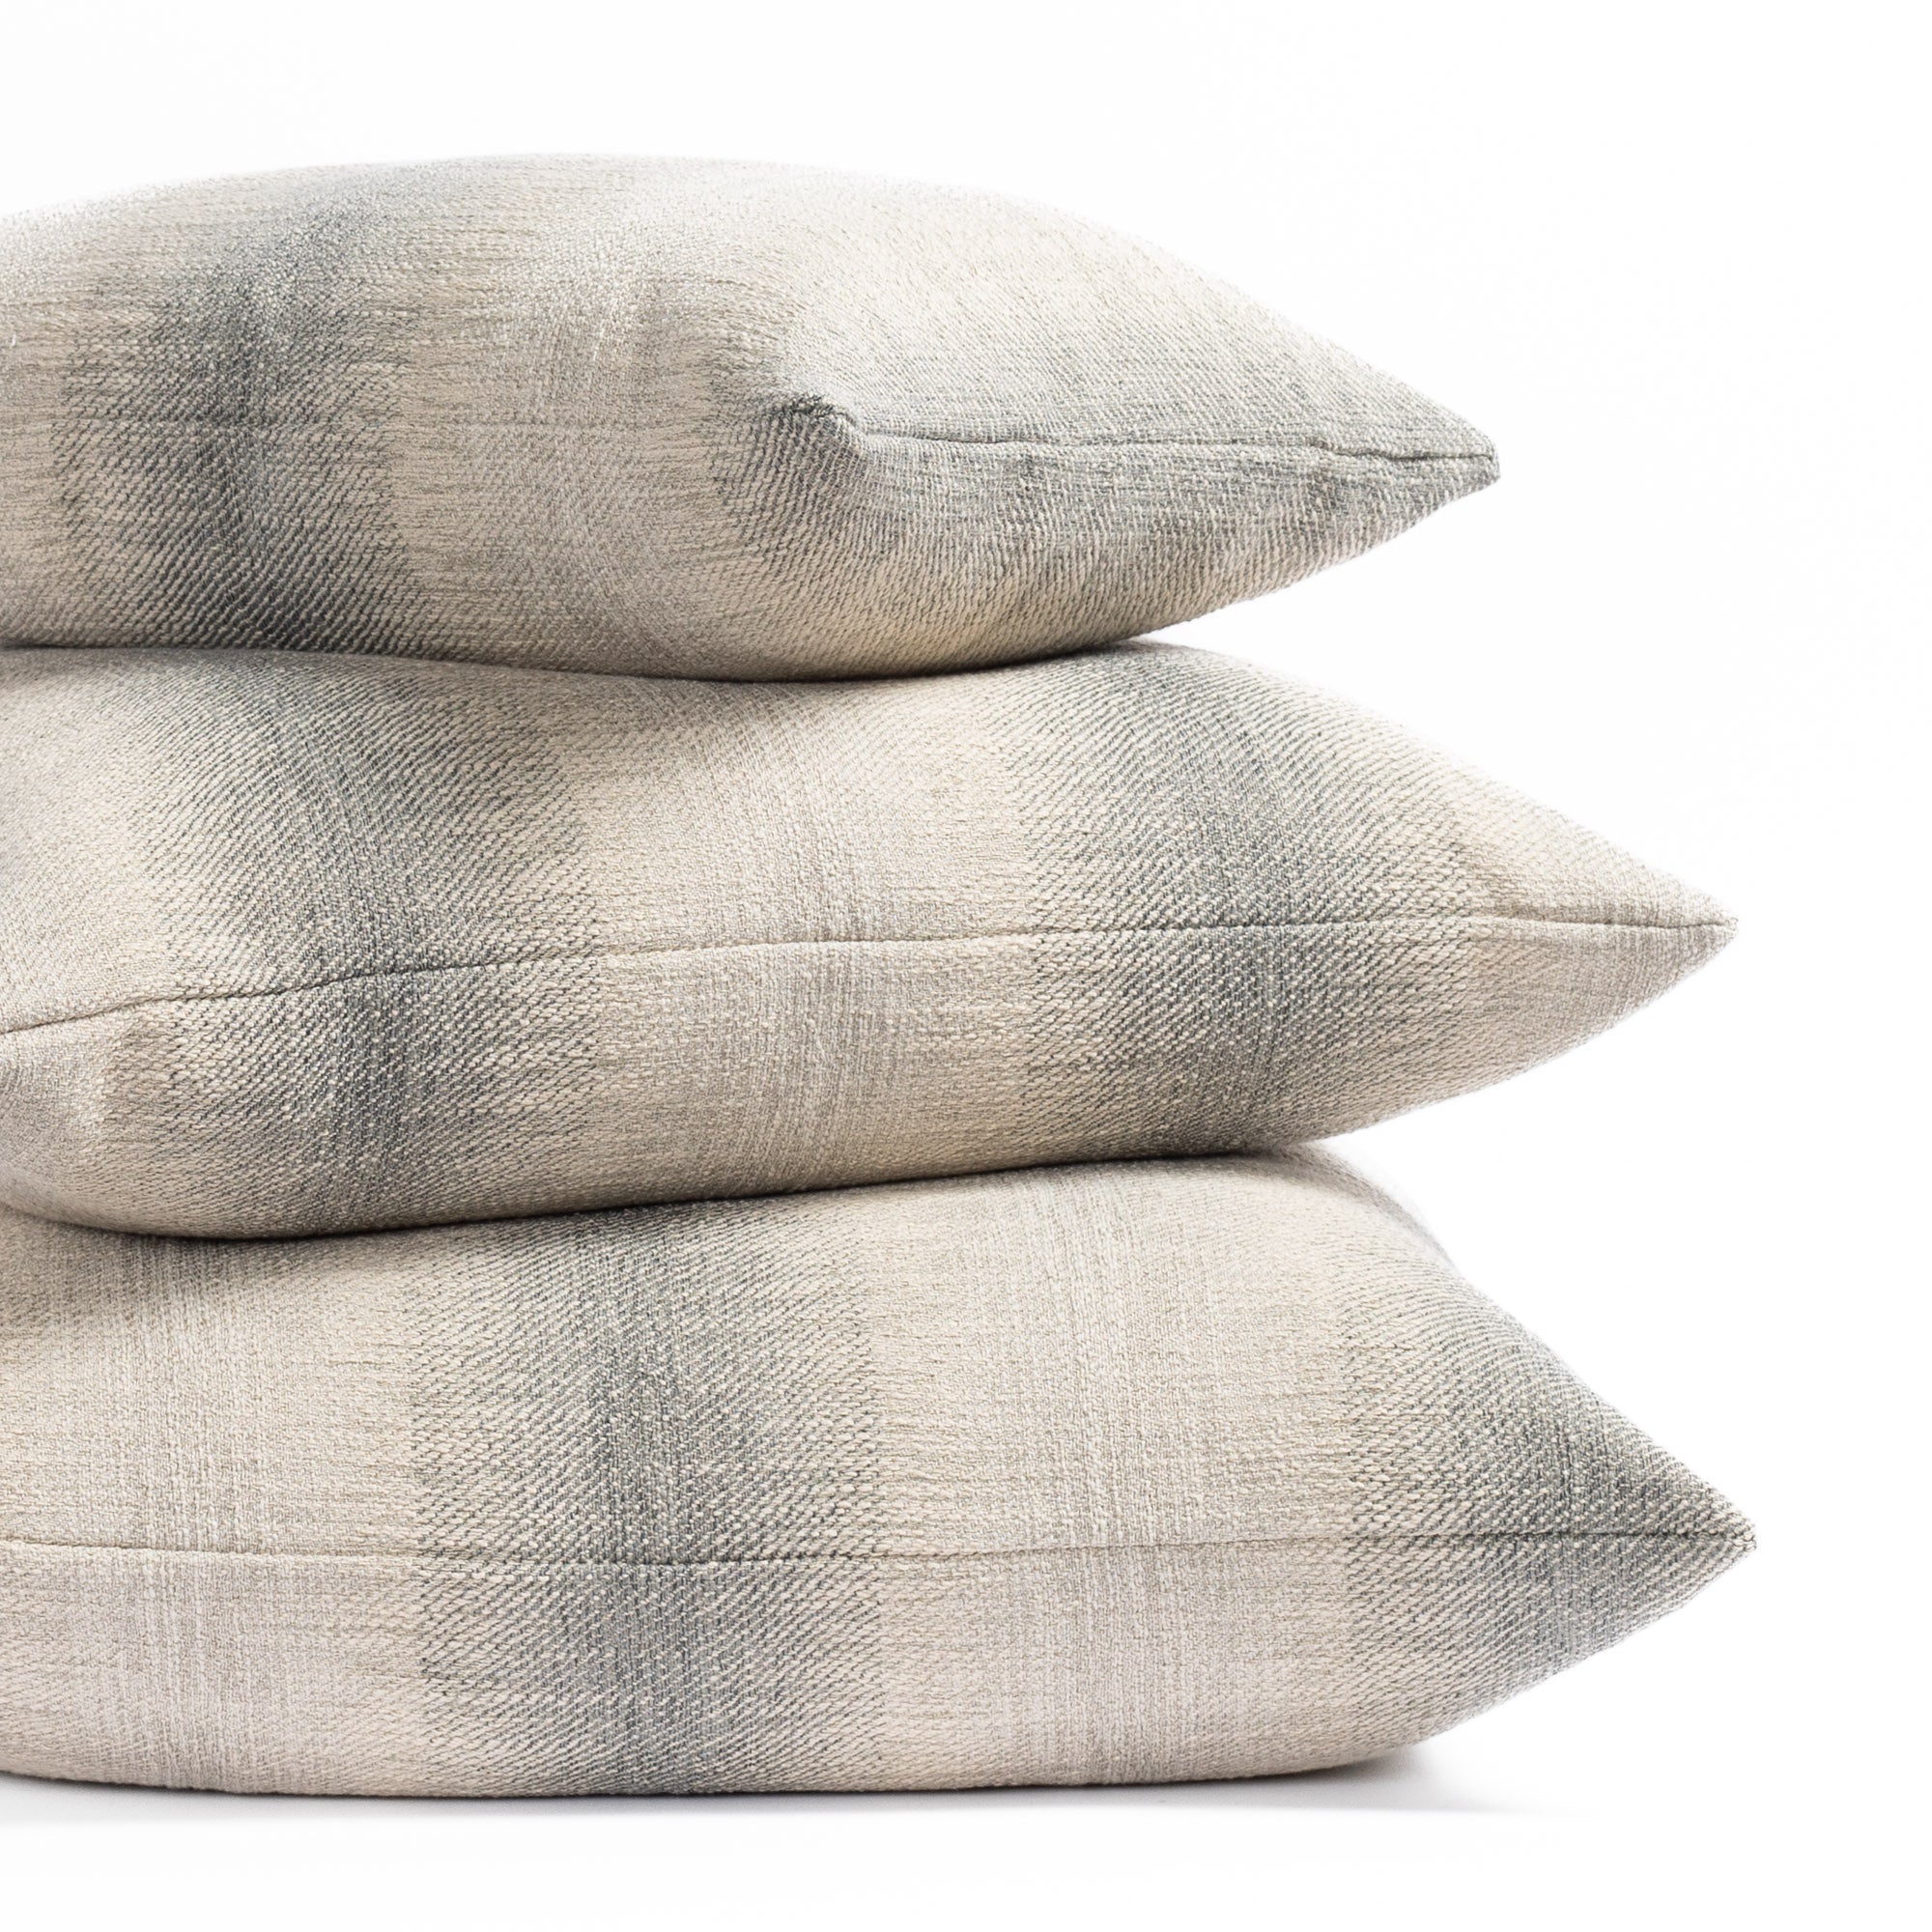 Tahoe Blue Smoke Throw pillows : smokey blue and sandy gray ombré stripe throw pillows in three sizes